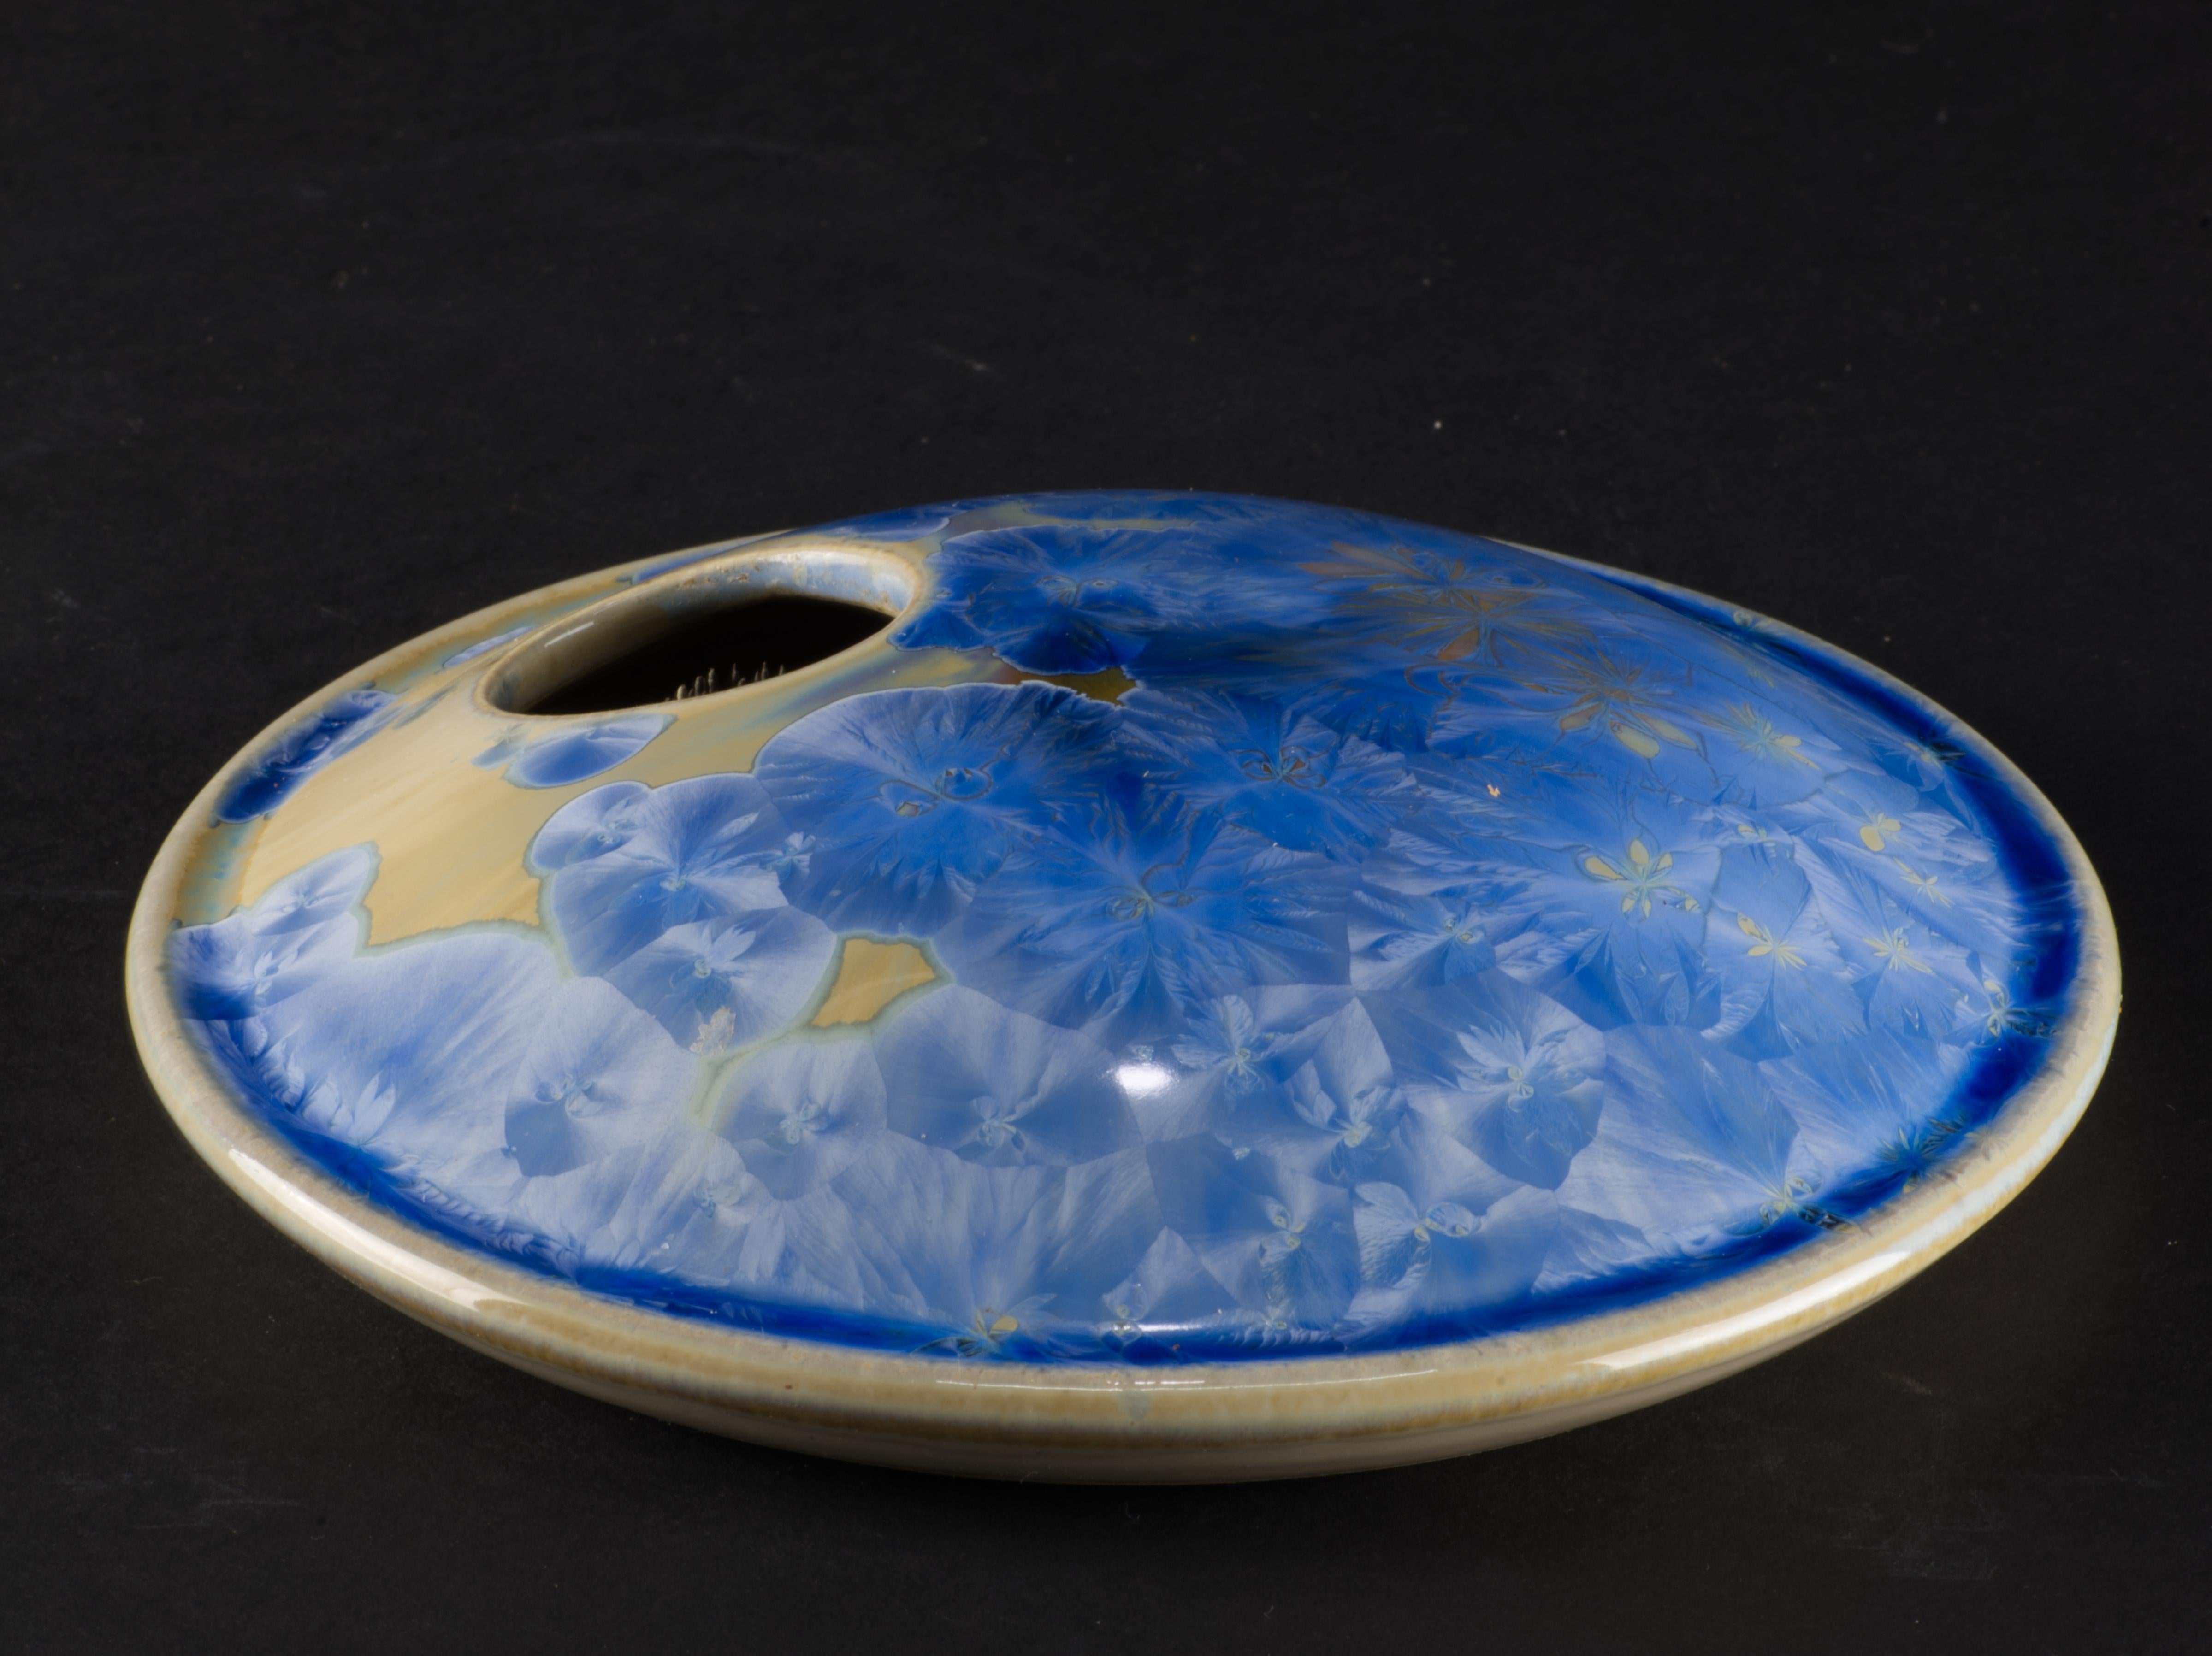 Crystalline Glaze Ceramic Ikebana Vase, Blue, American Studio Pottery, 2003 For Sale 1